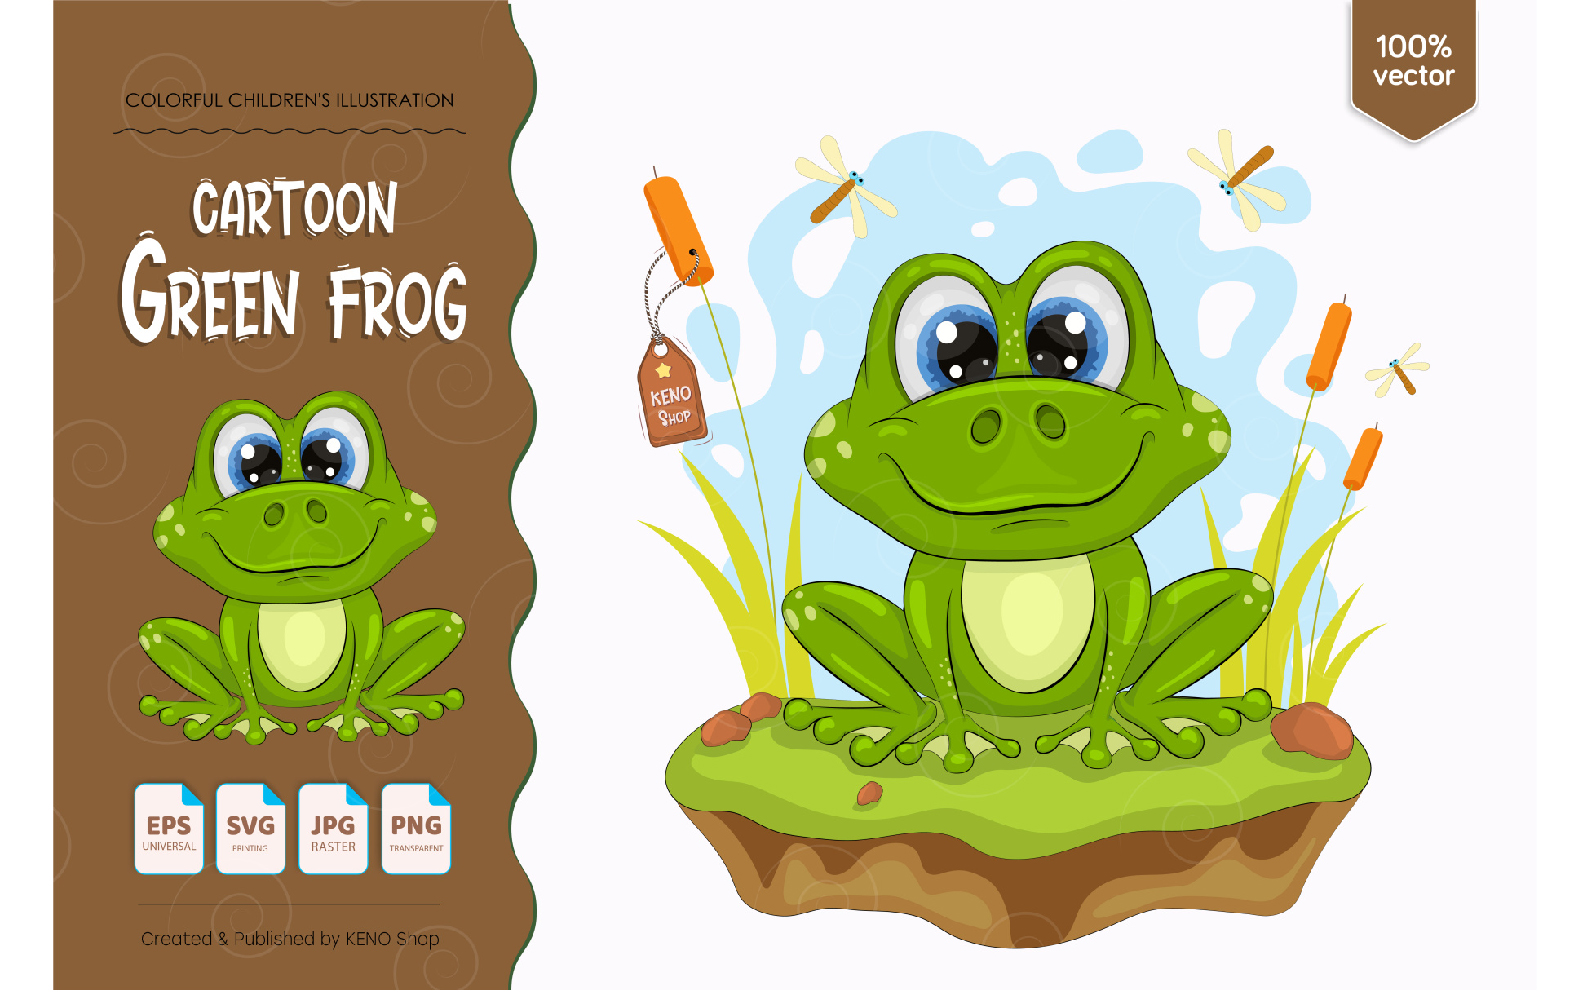 Cartoon Green Frog - Vector Image